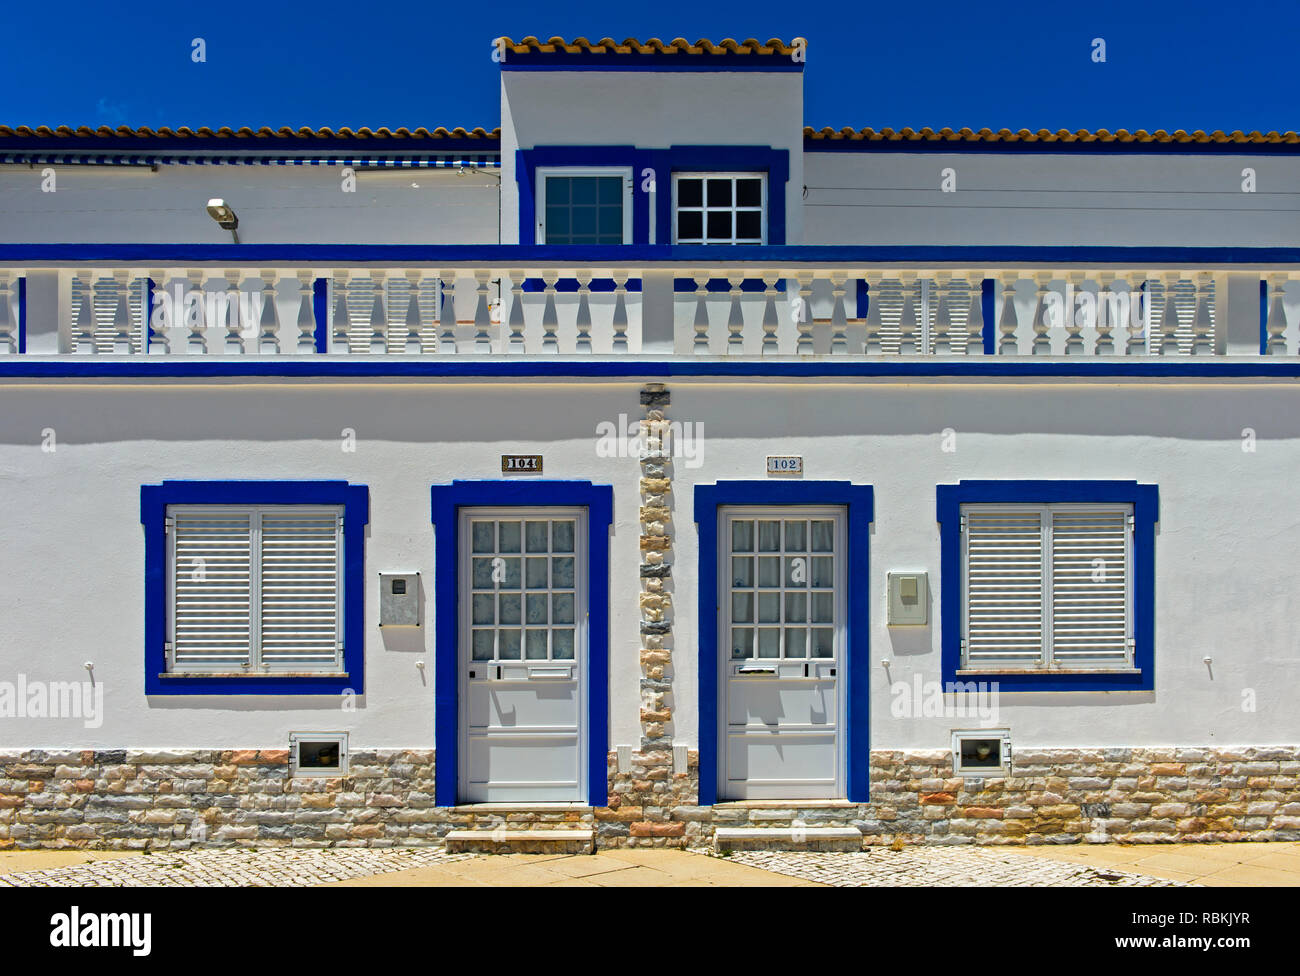 Residential house in the Mediterranean style, Santa Luzia, Algarve, Portugal Stock Photo